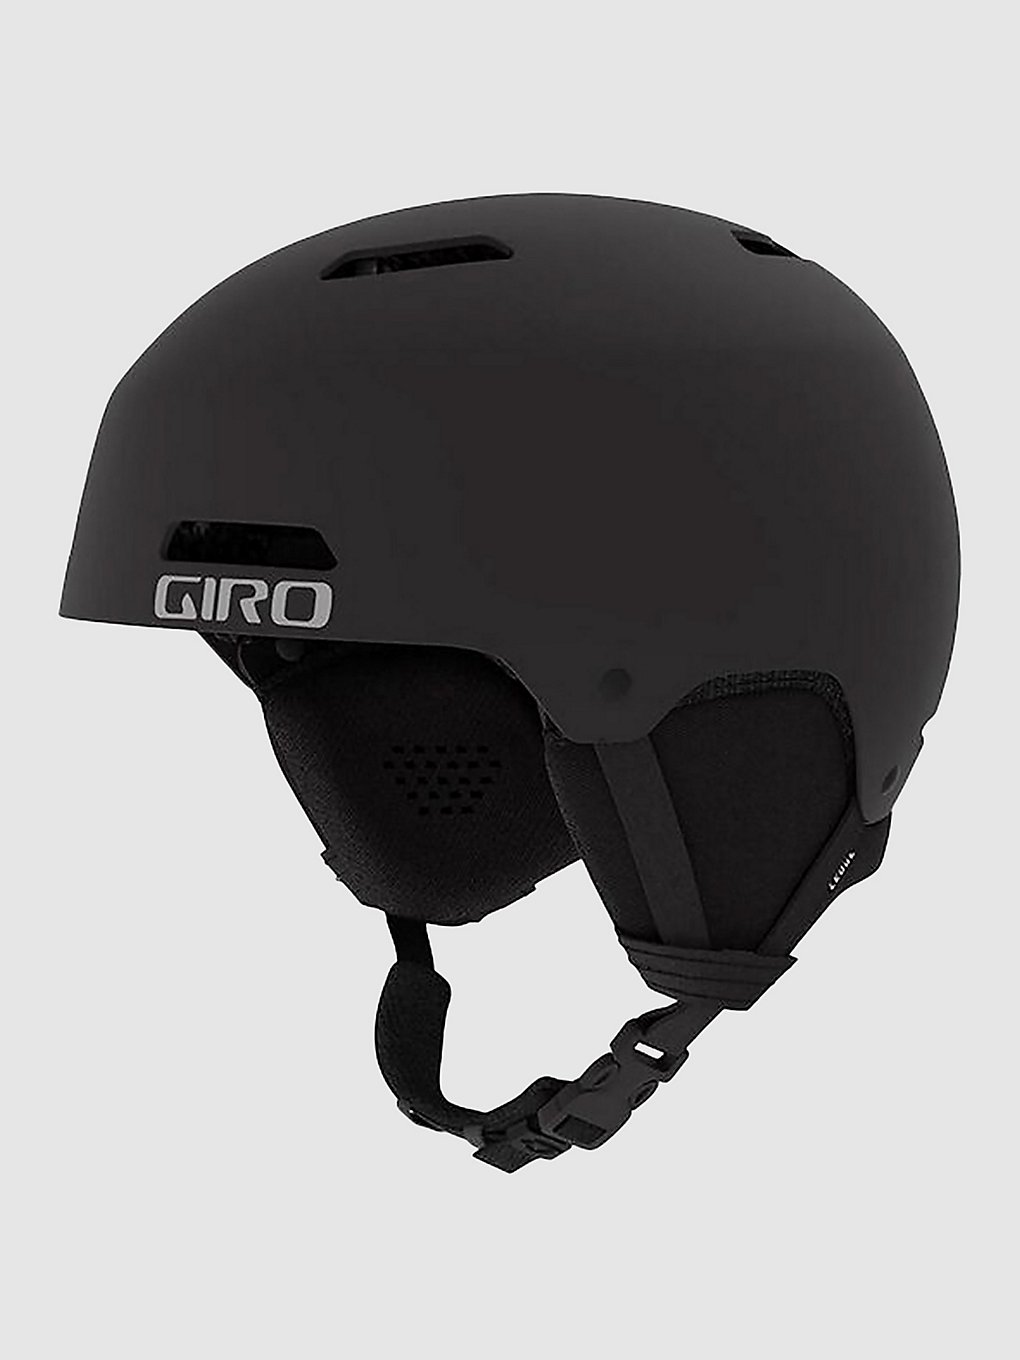 Giro Ledge Helm matte black kaufen